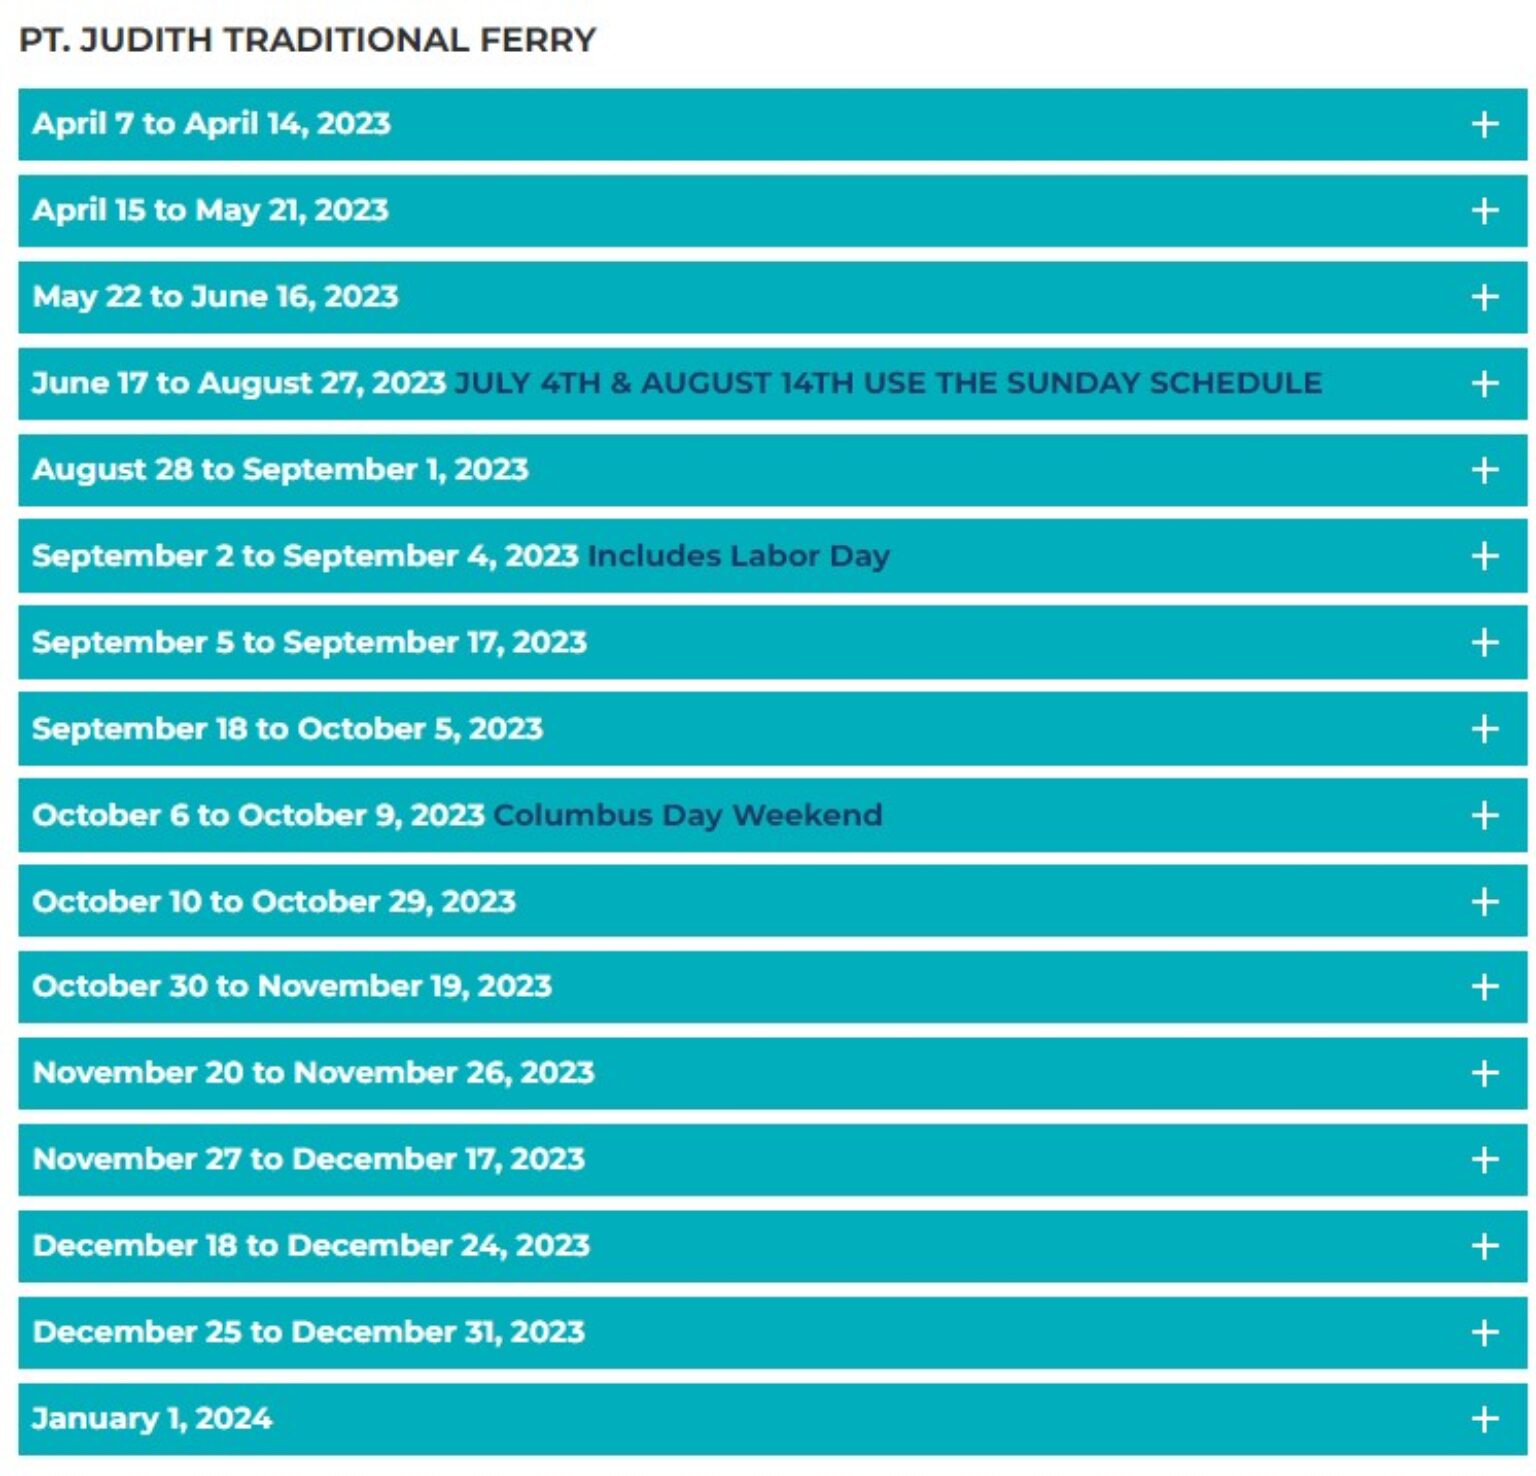 Block Island Ferry Schedule 2023 / 5 routes - FerryGoGo.com